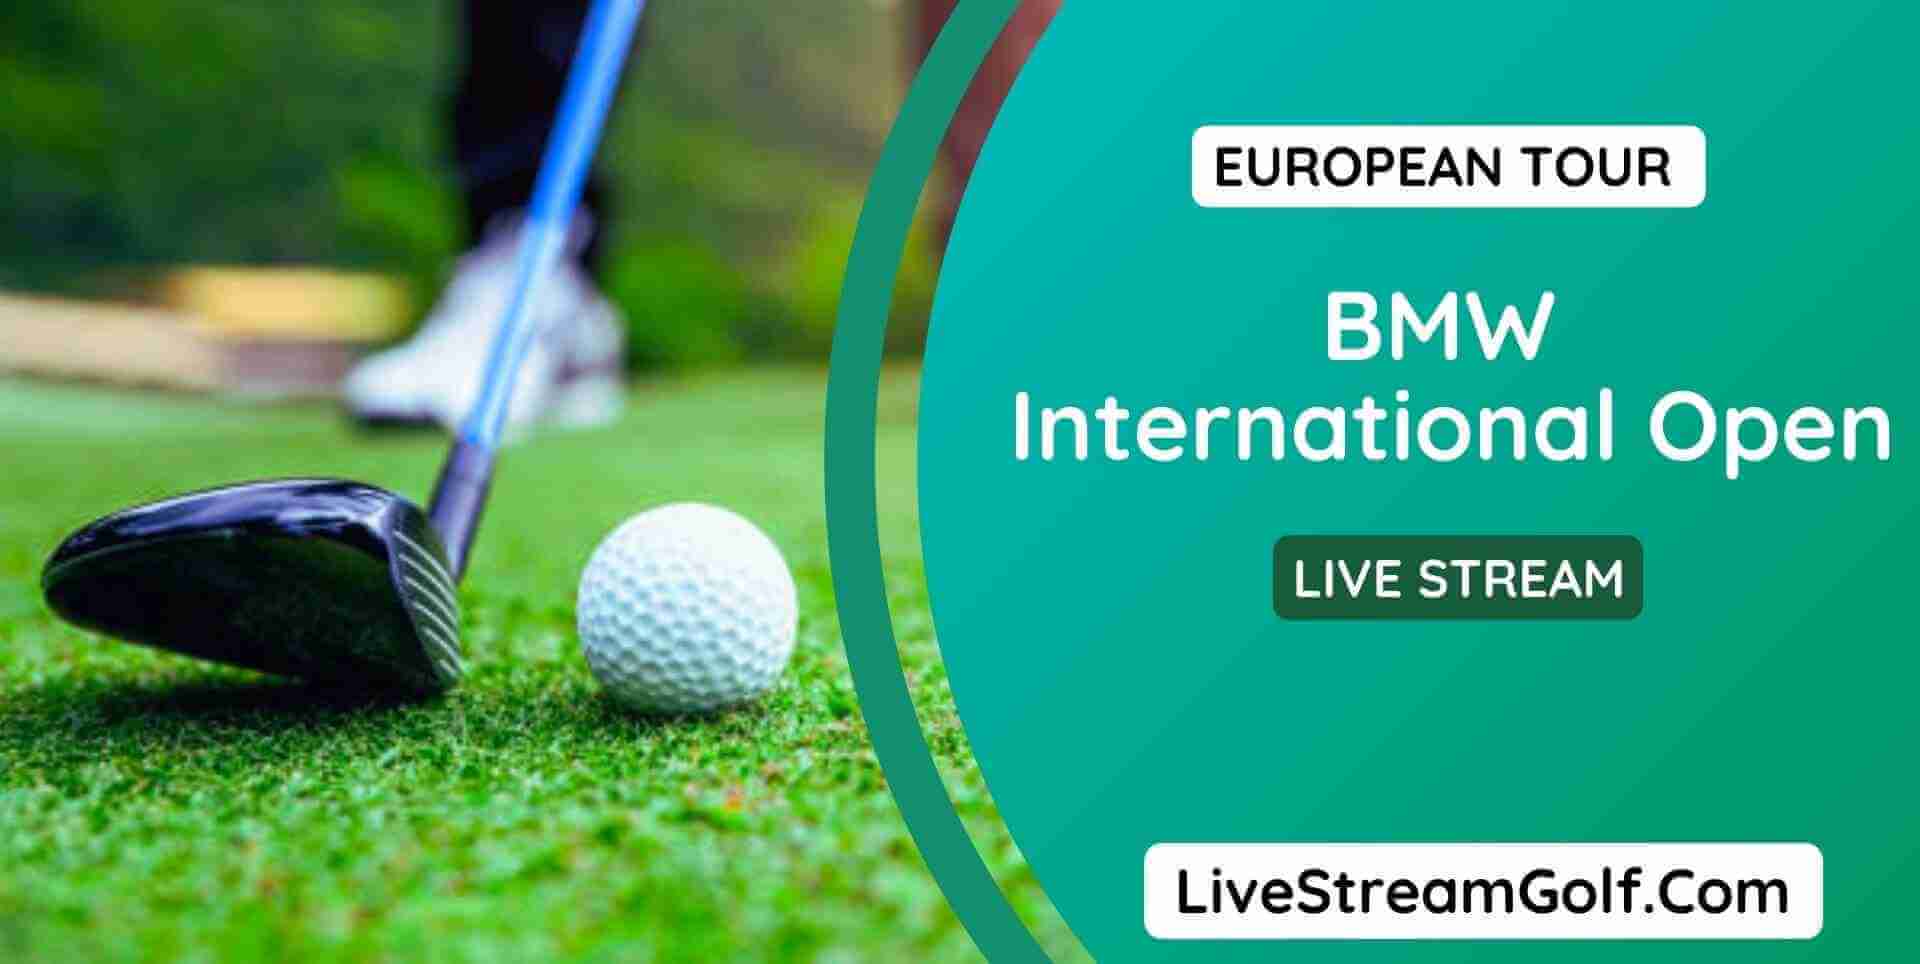 bmw-international-open-live-stream-golf-european-tour